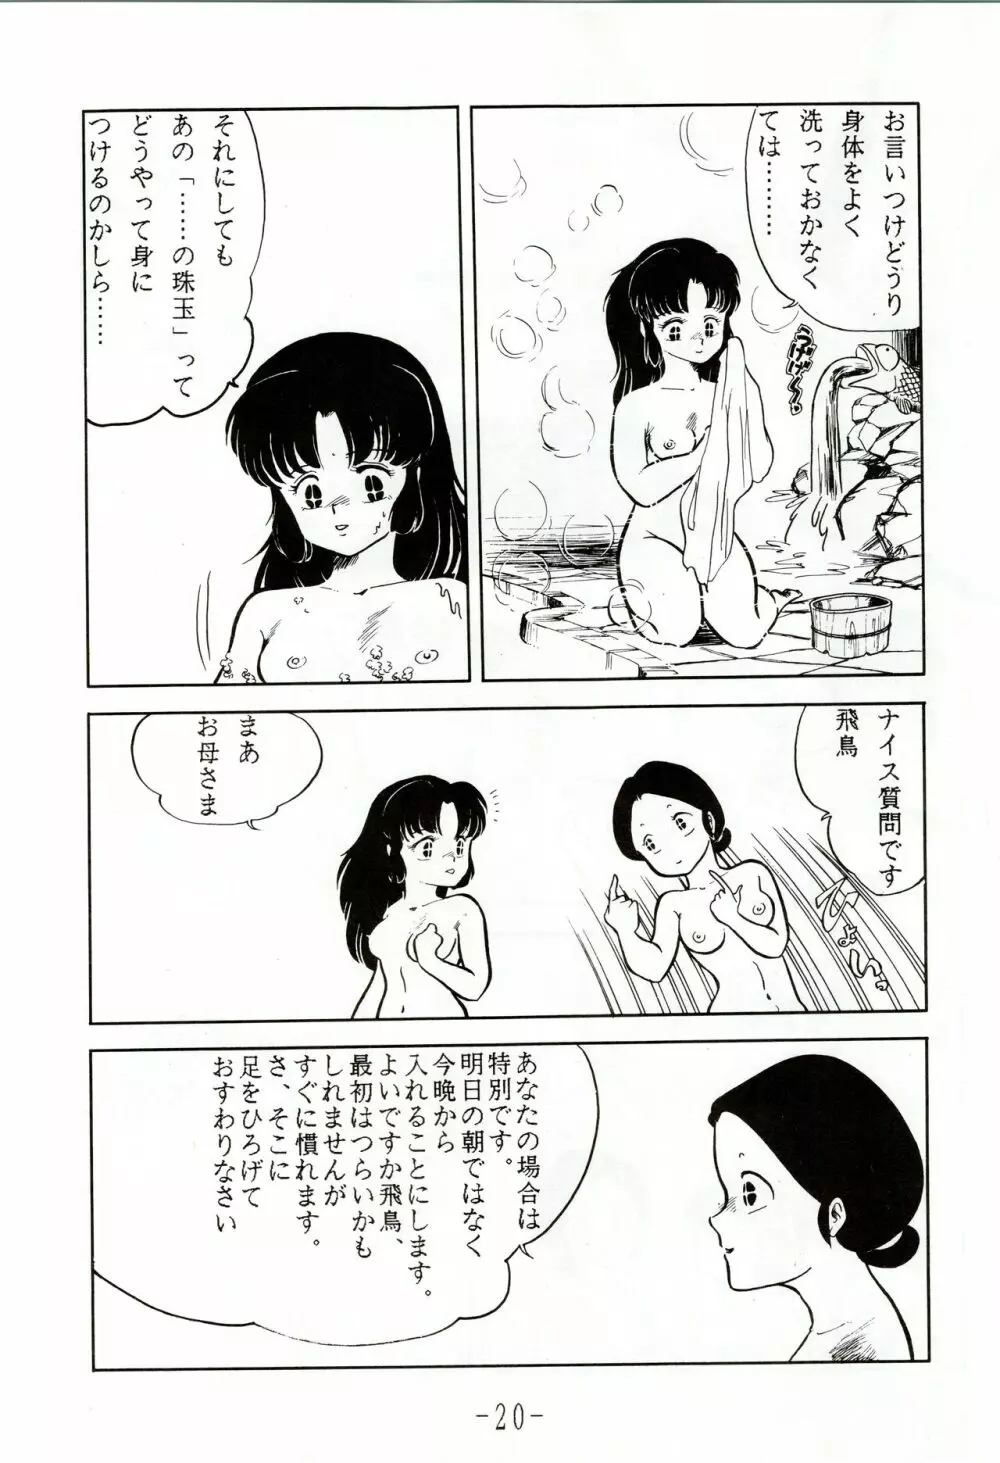 甲冑伝説 - page20